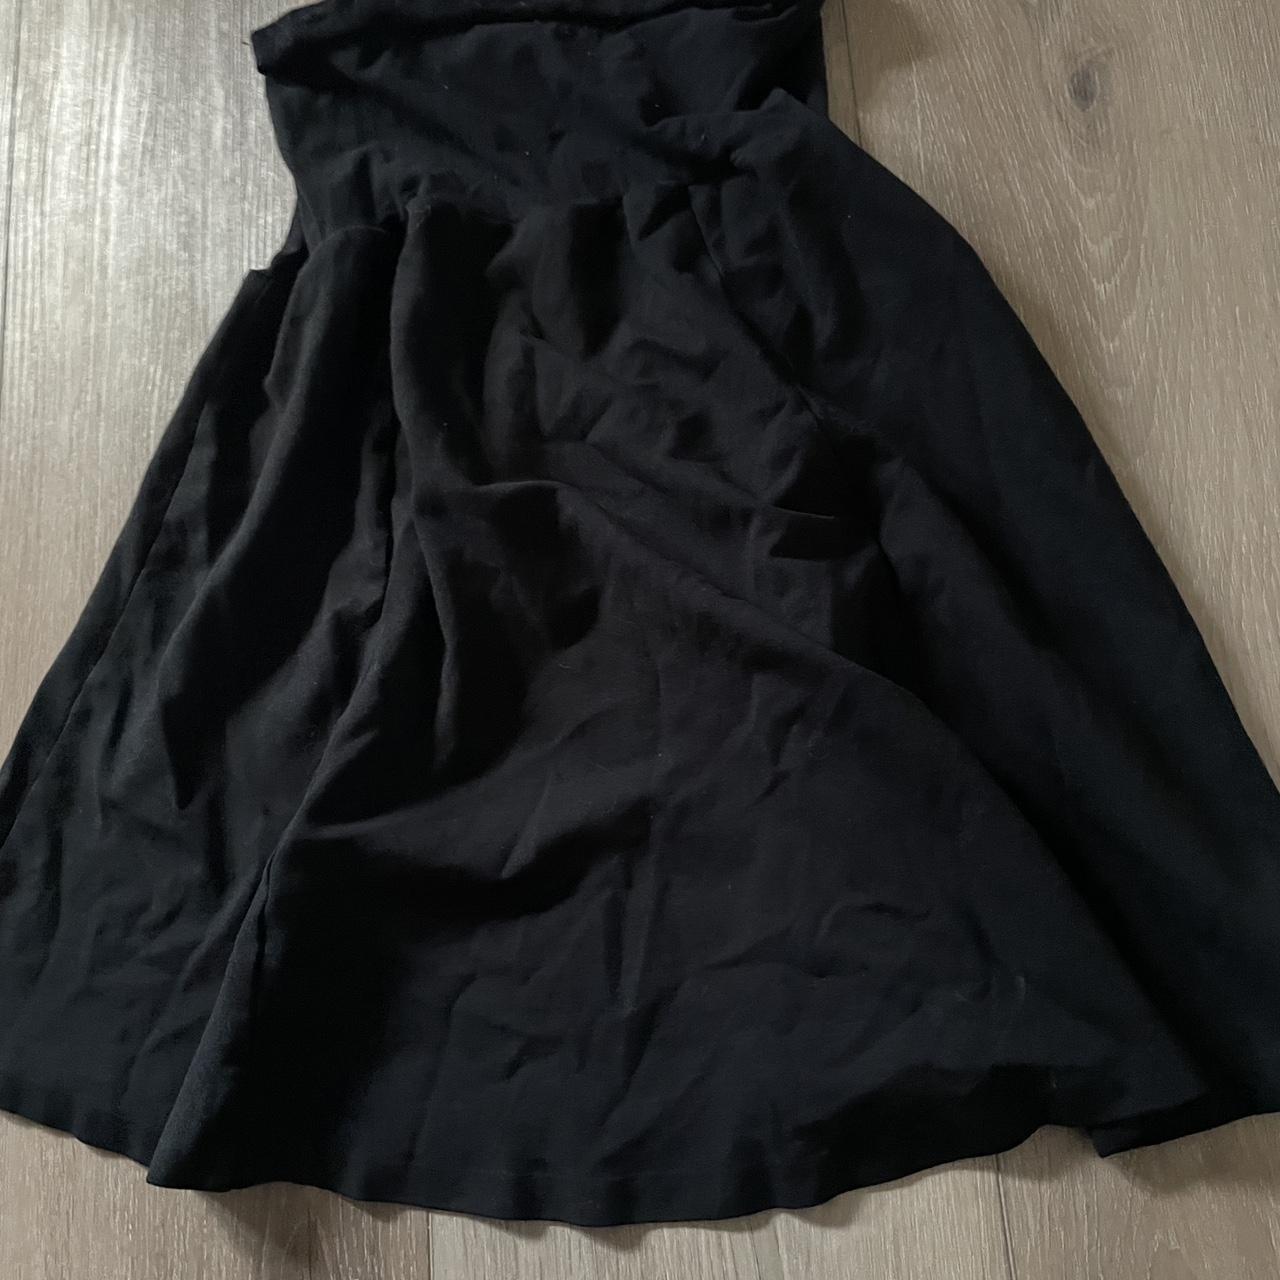 Black pleaded skirt Y2k gothic alternitave black... - Depop